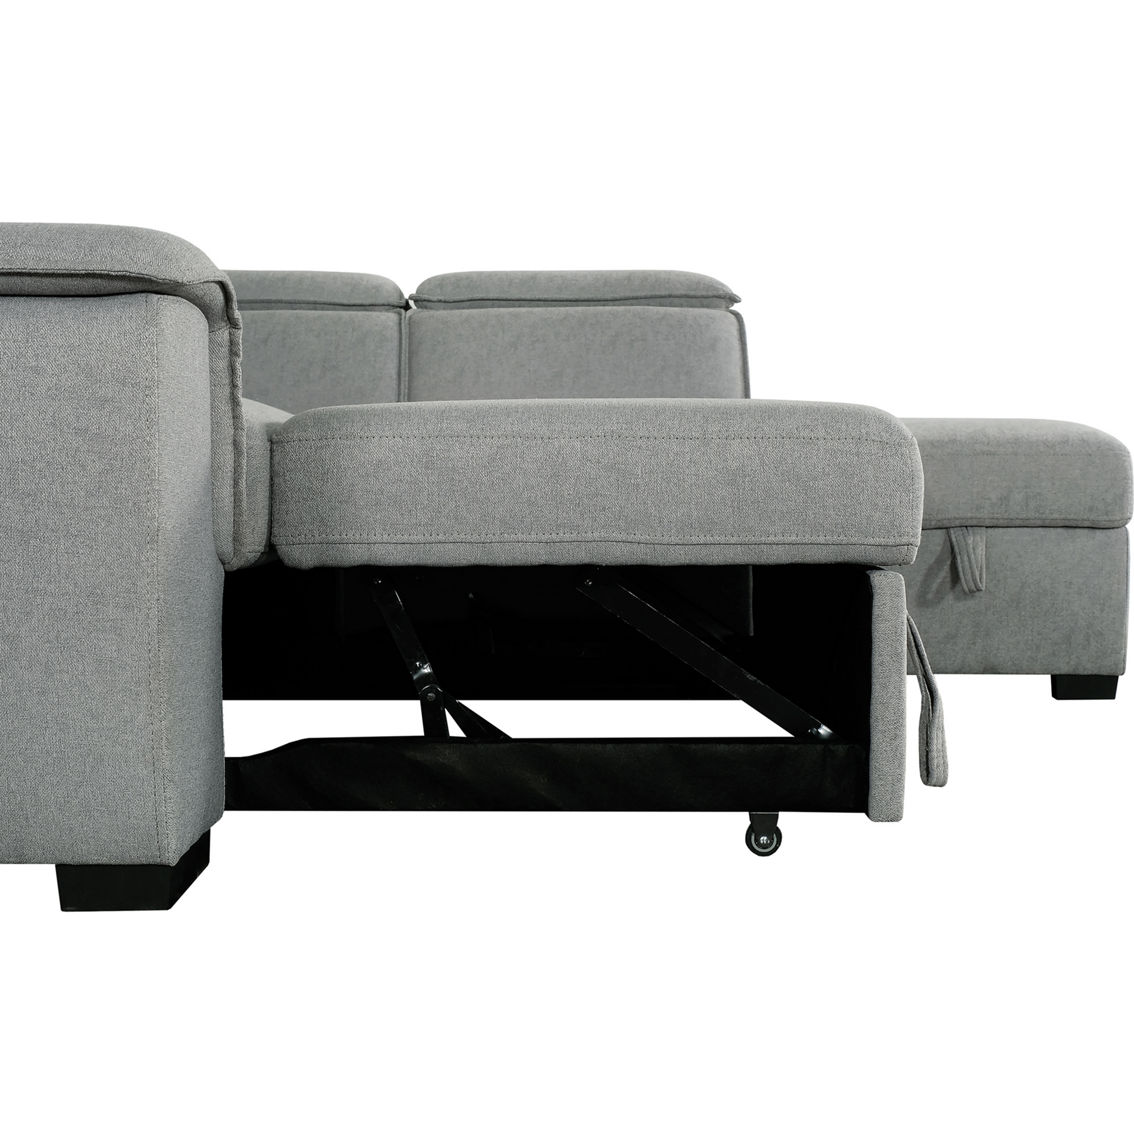 Primo International Joss Corner Sofa Bed with Storage - Image 4 of 5